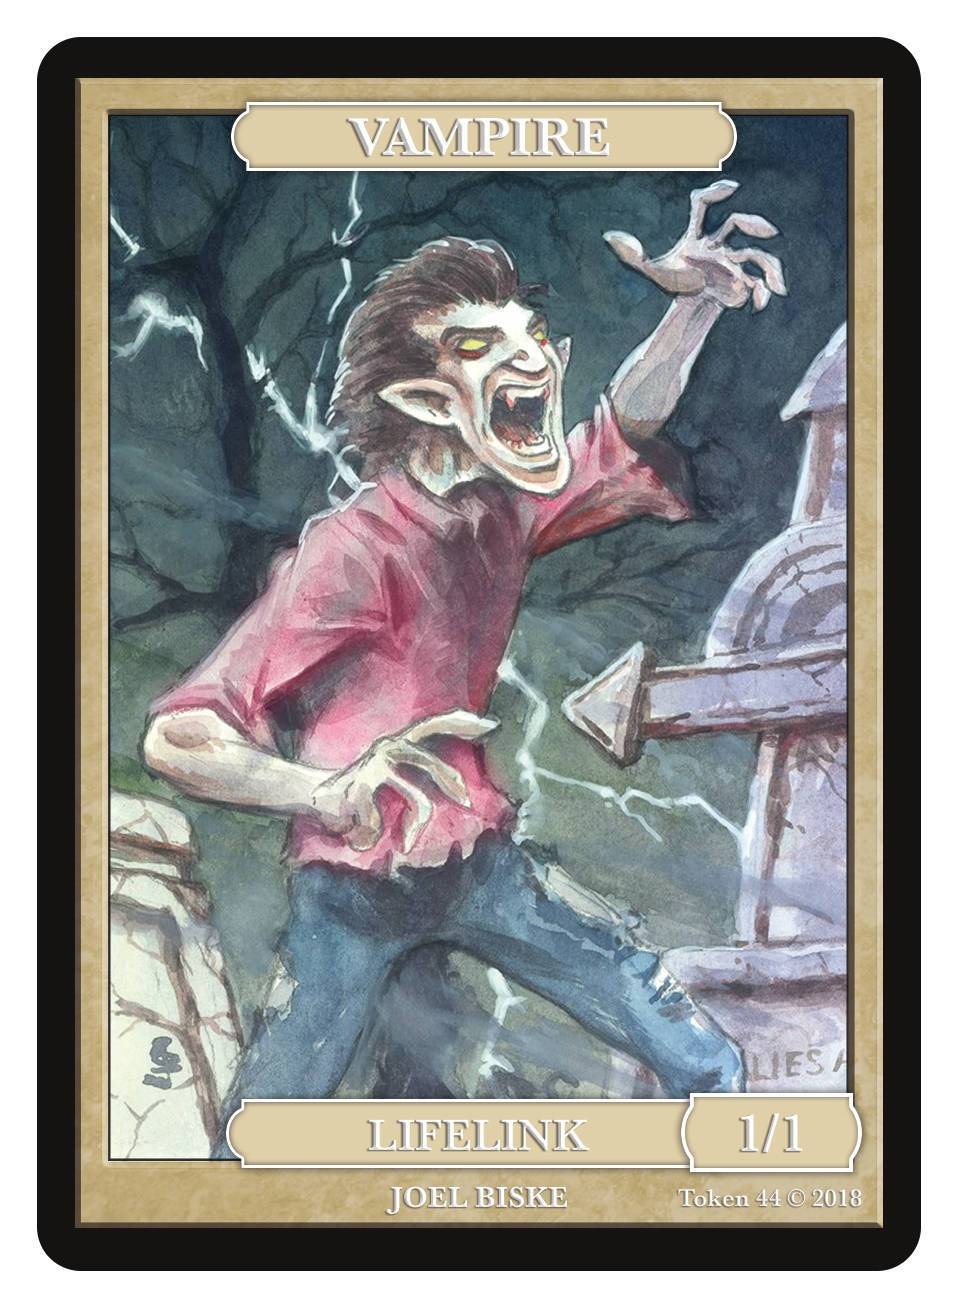 Vampire Token (1/1 - Lifelink) by Joel Biske - Token - Original Magic Art - Accessories for Magic the Gathering and other card games